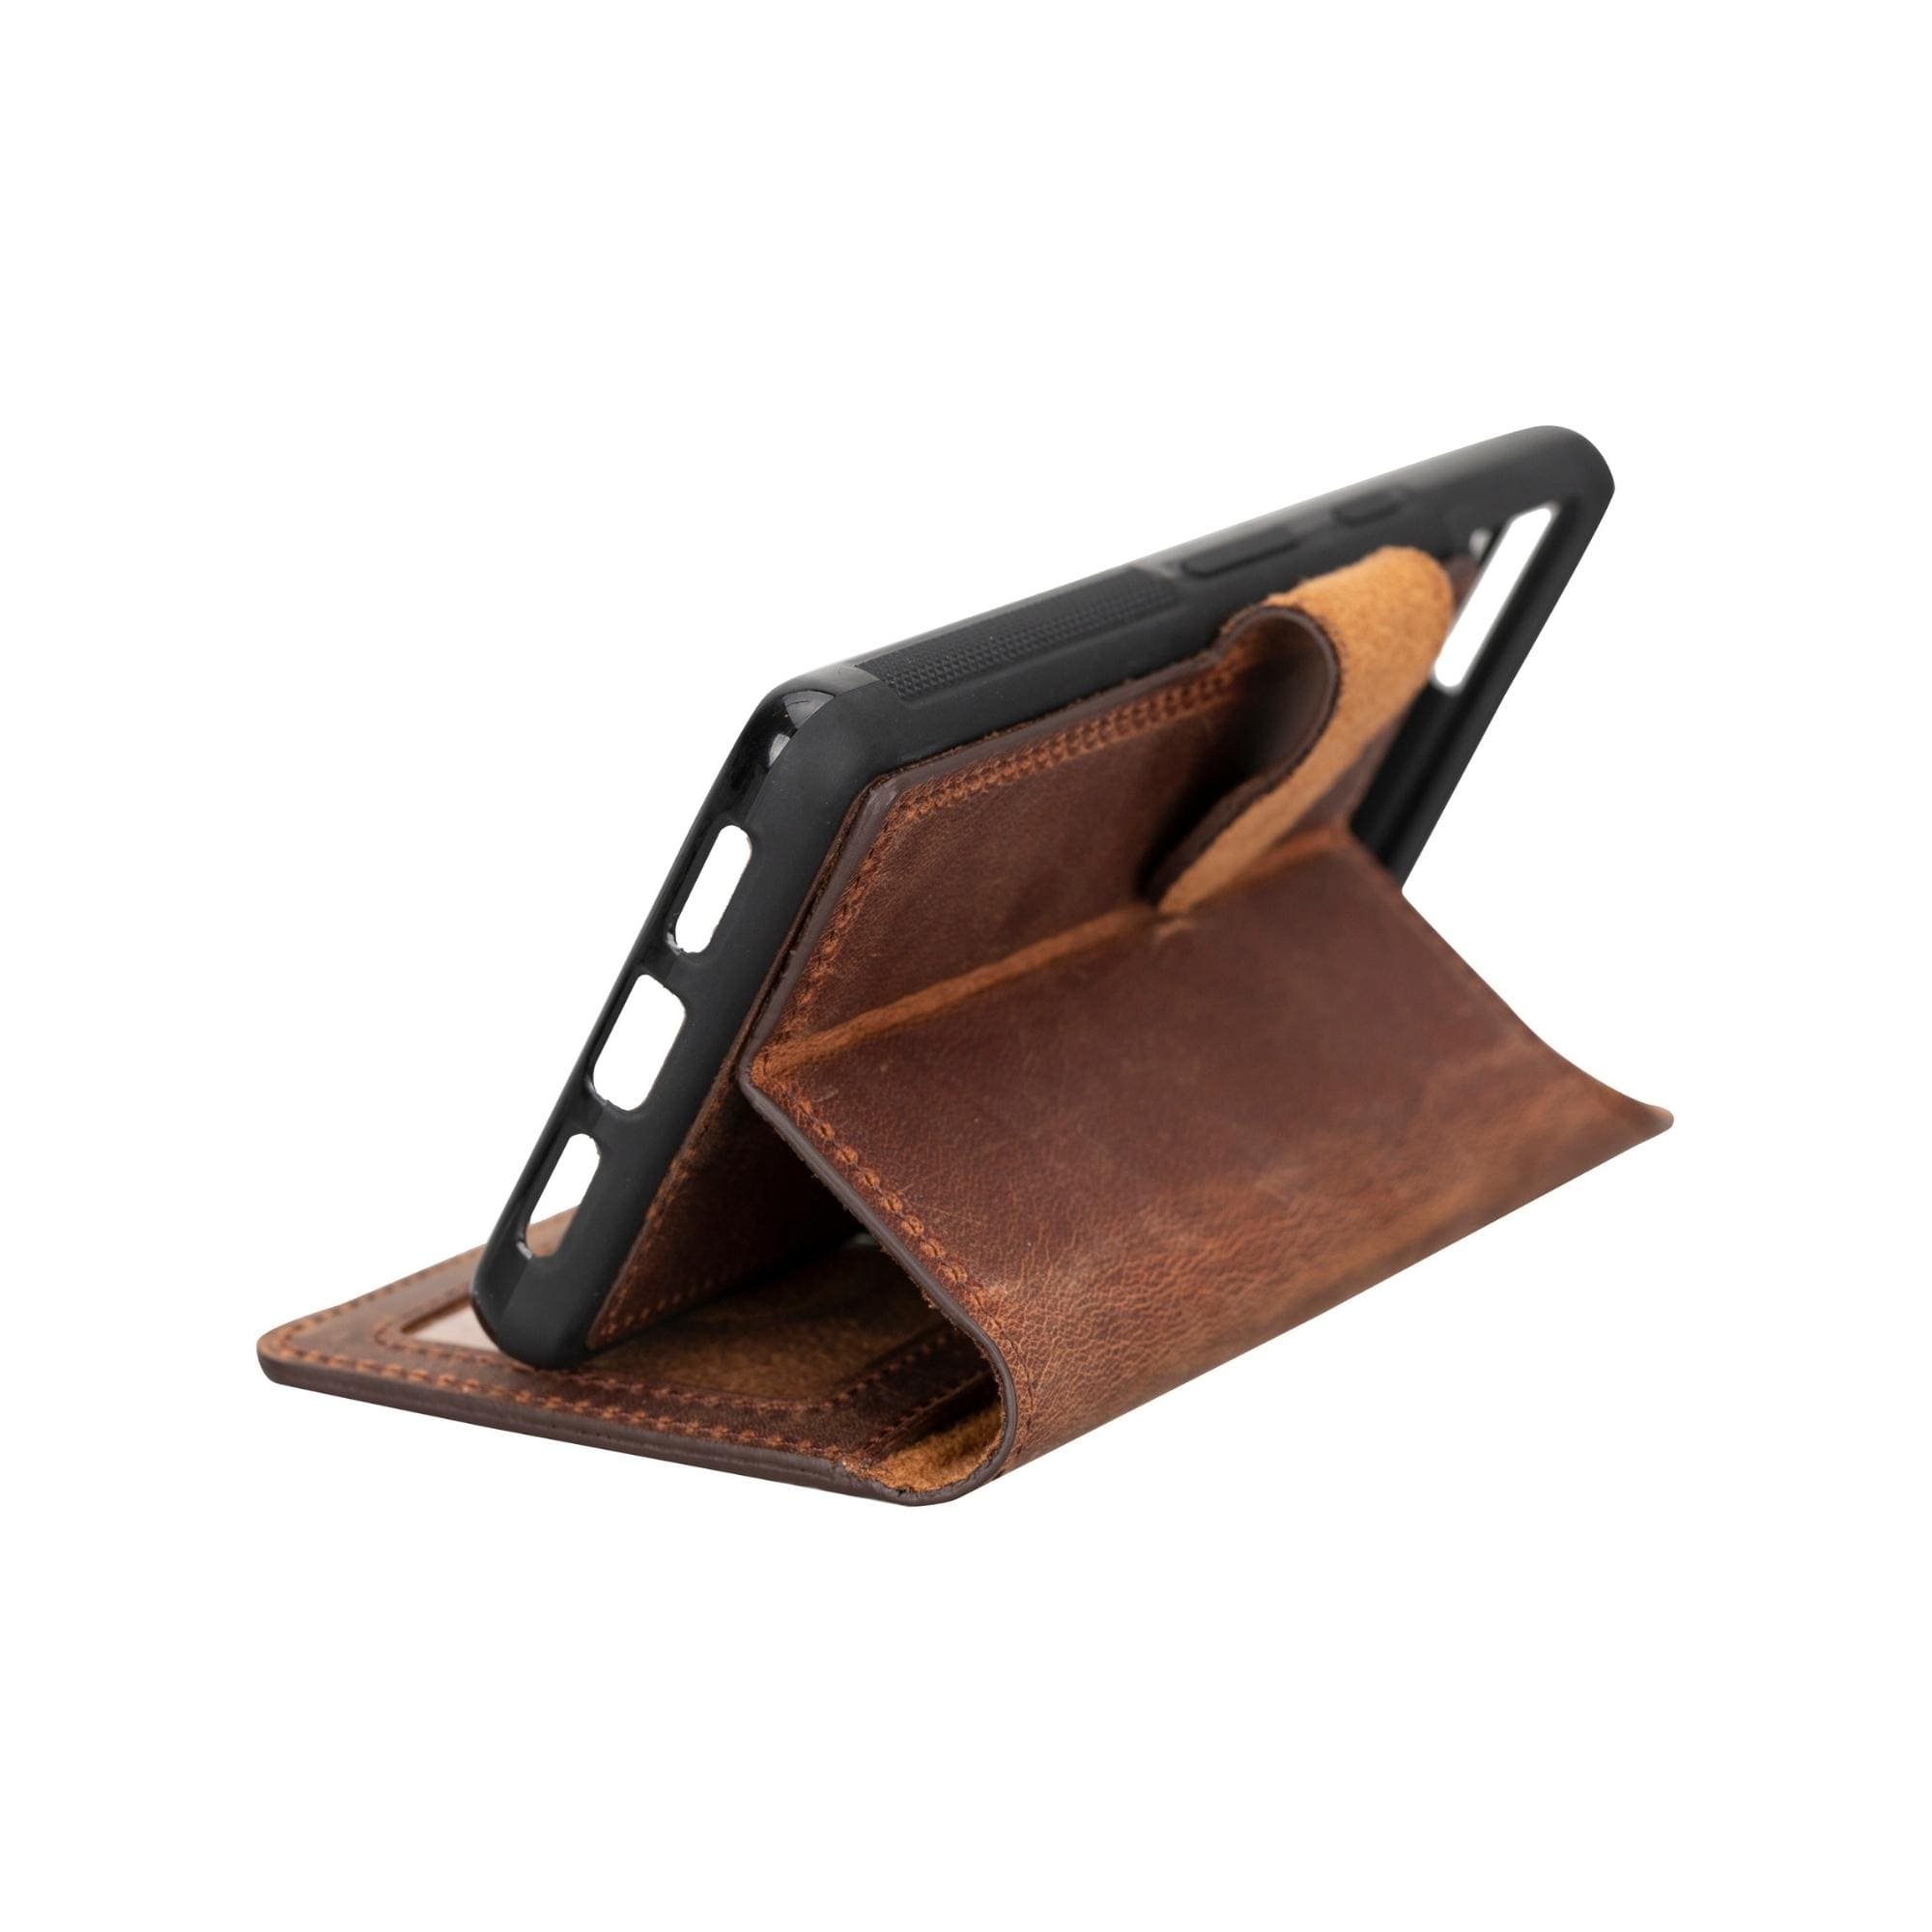 Sheridan Leather Detachable Wallet for Google Pixel 5 - Google Pixel 5 - Dark Brown - TORONATA